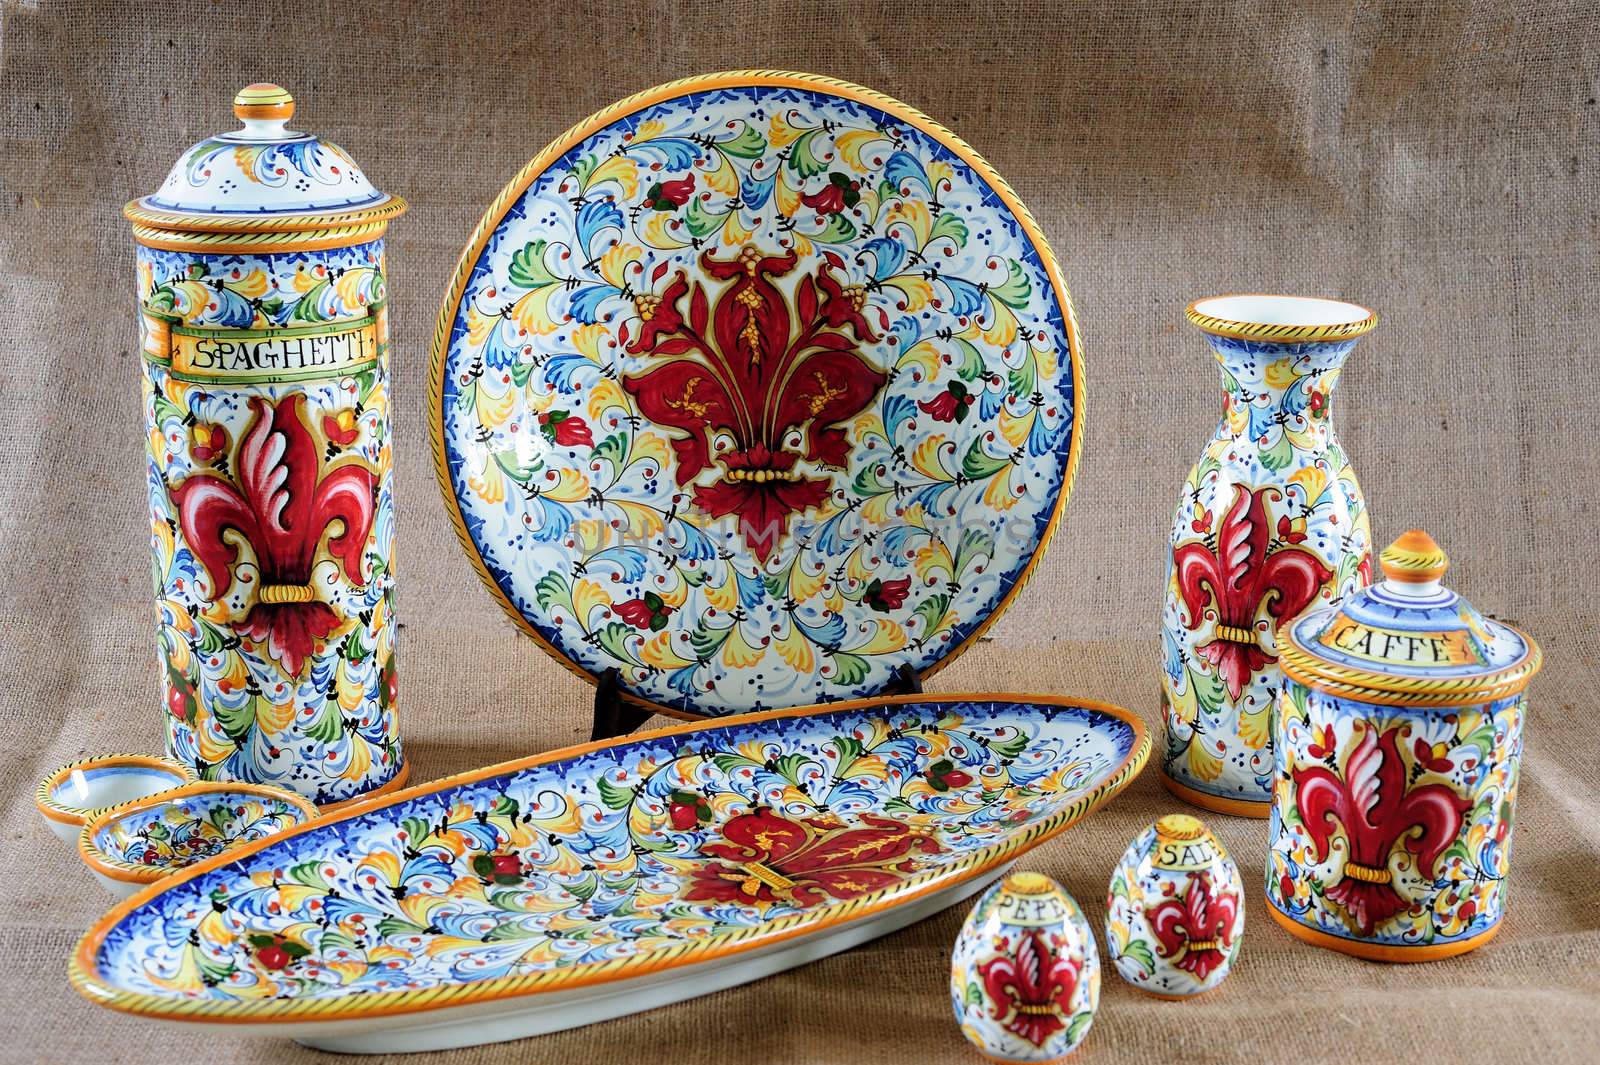 Tuscan Potteries by mizio1970